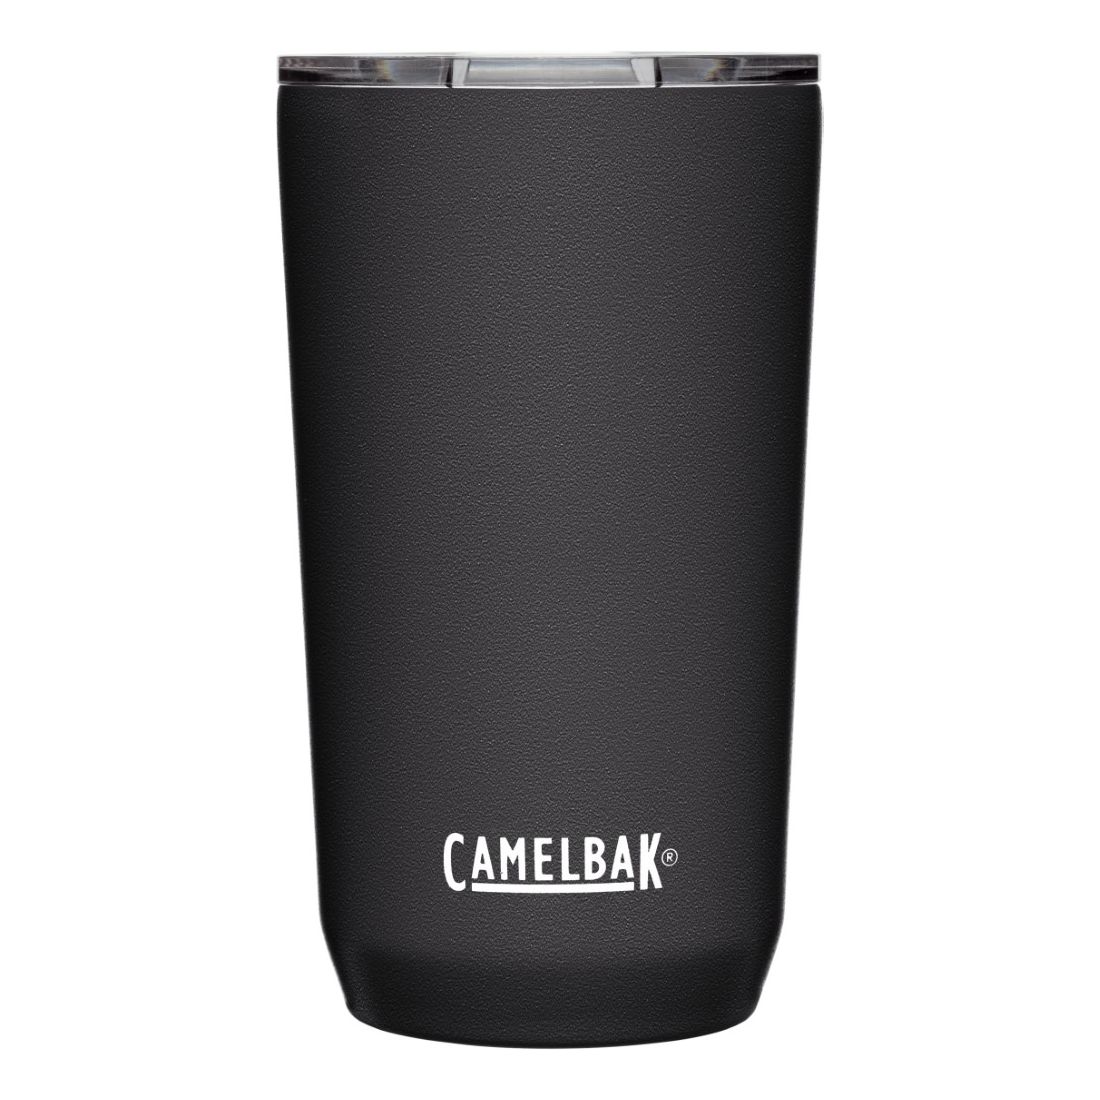 Camelbak Tumbler Stainless Steel Vacuum Insulated 16Oz Black